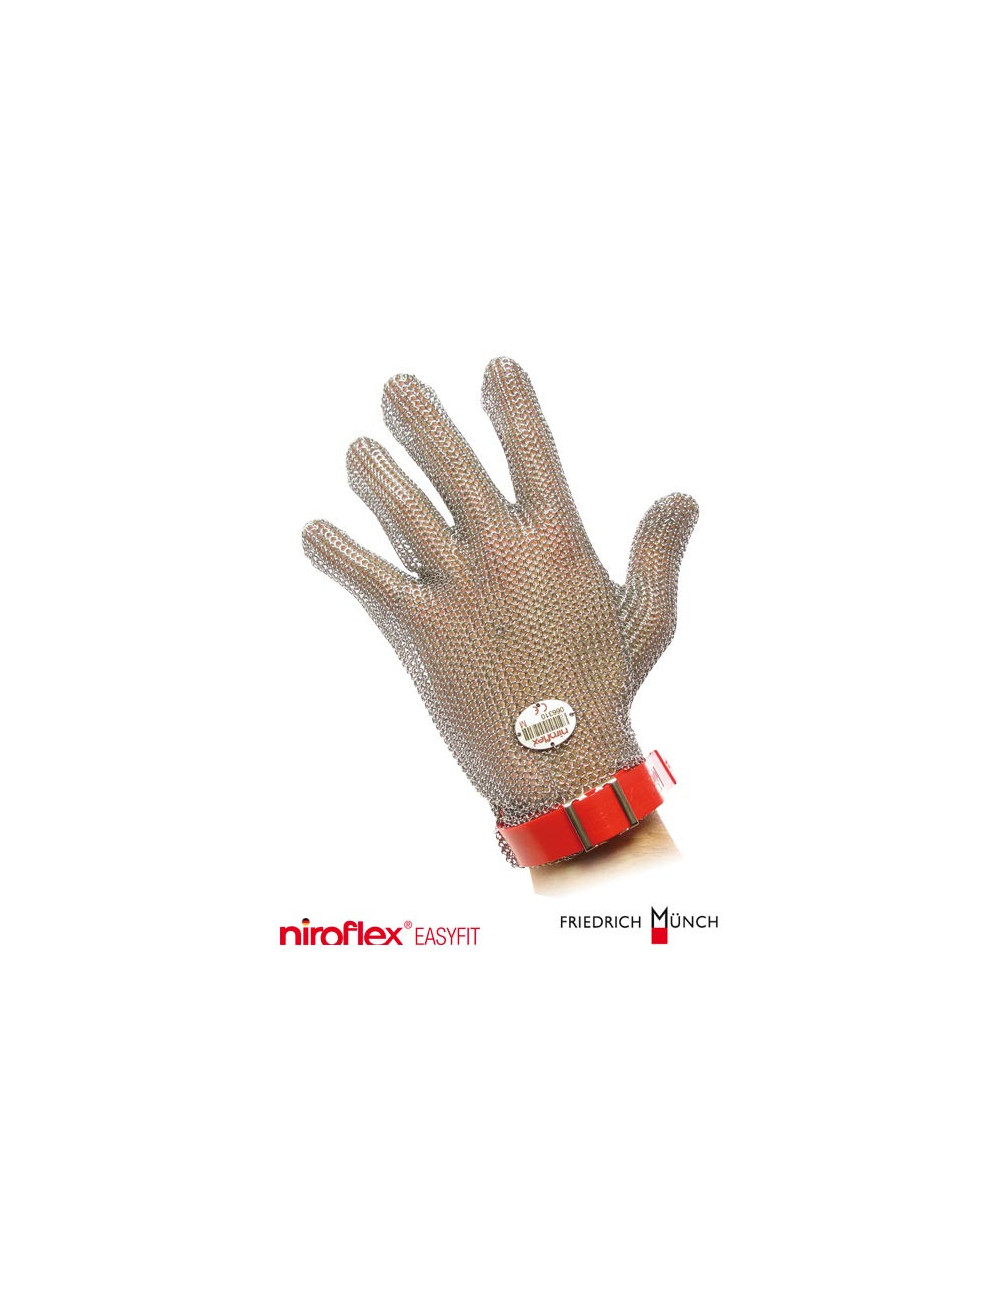 Protective gloves rnirox-easy münch Friedrich